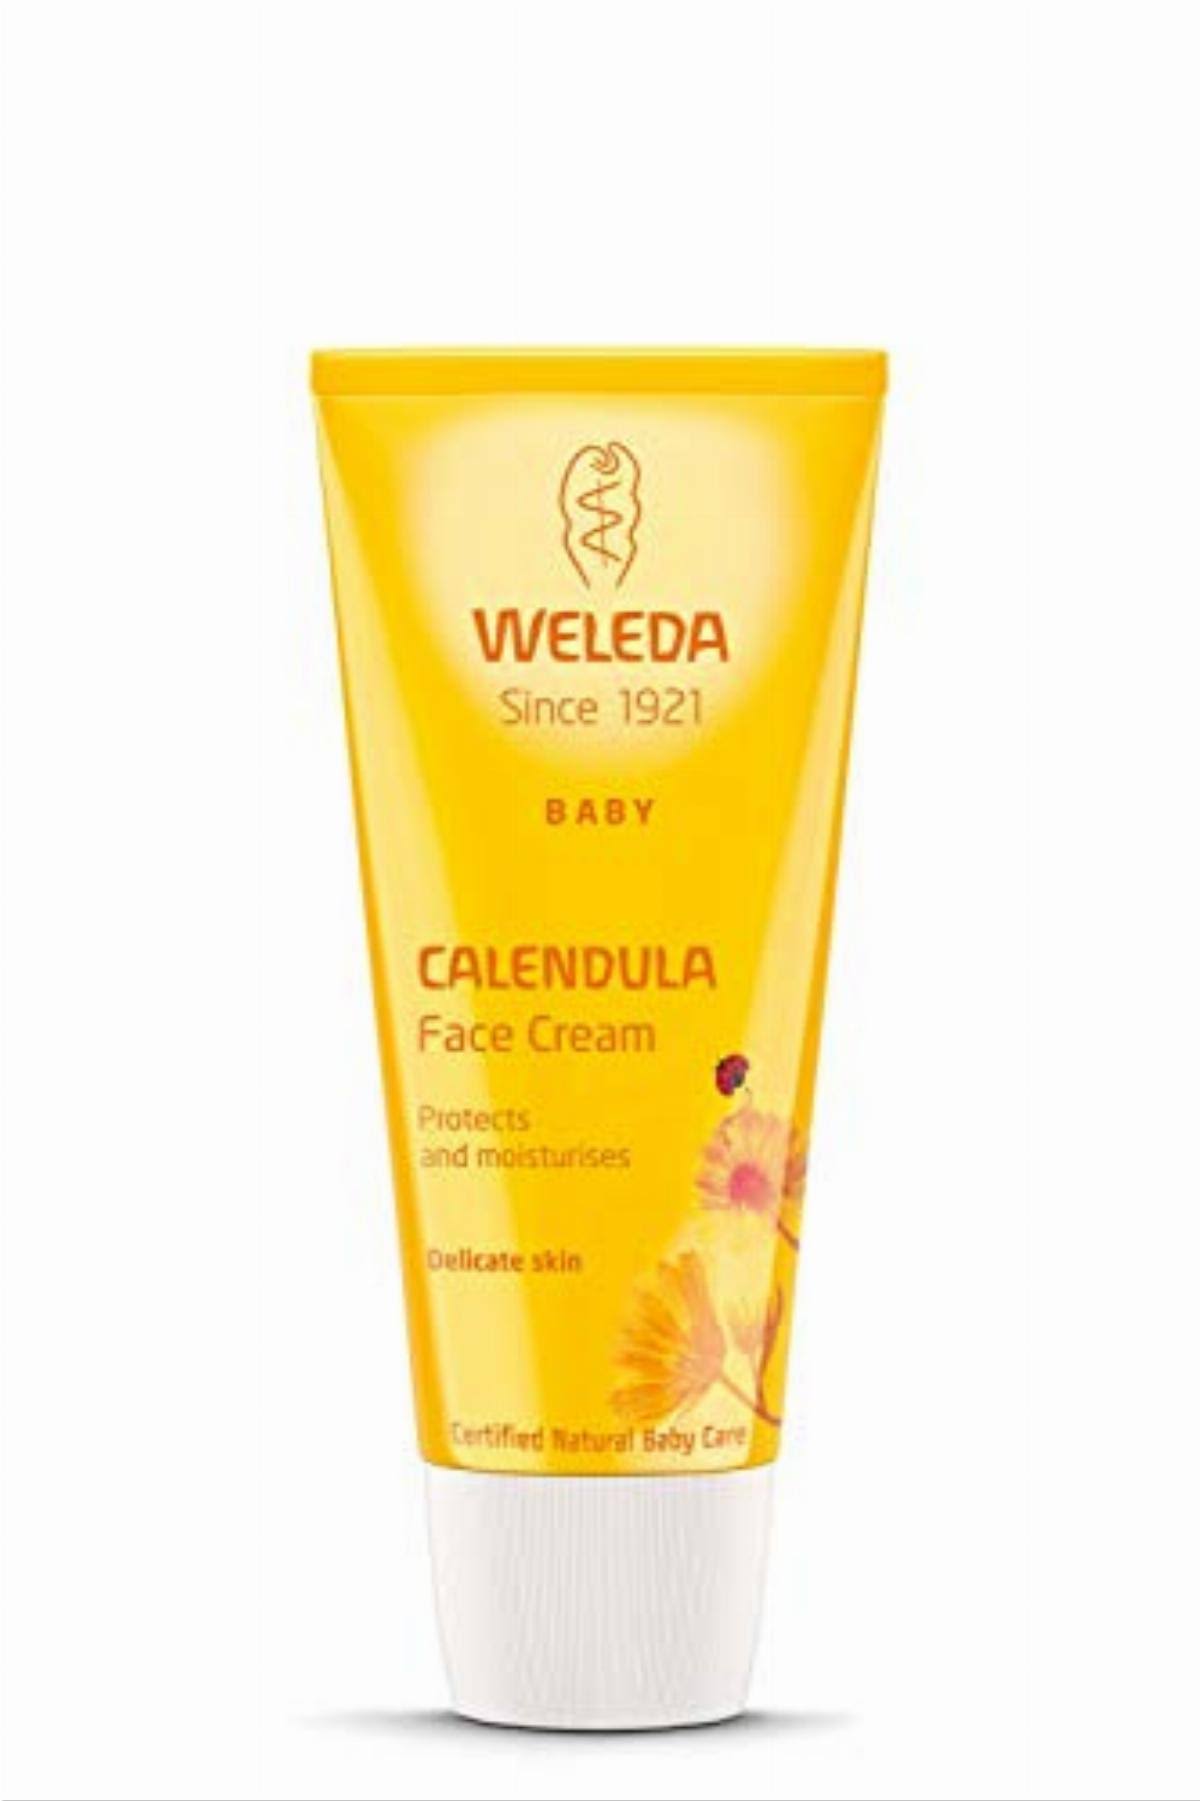 Weleda Baby Face Cream - Calendula, Delicate Skin, 50ml